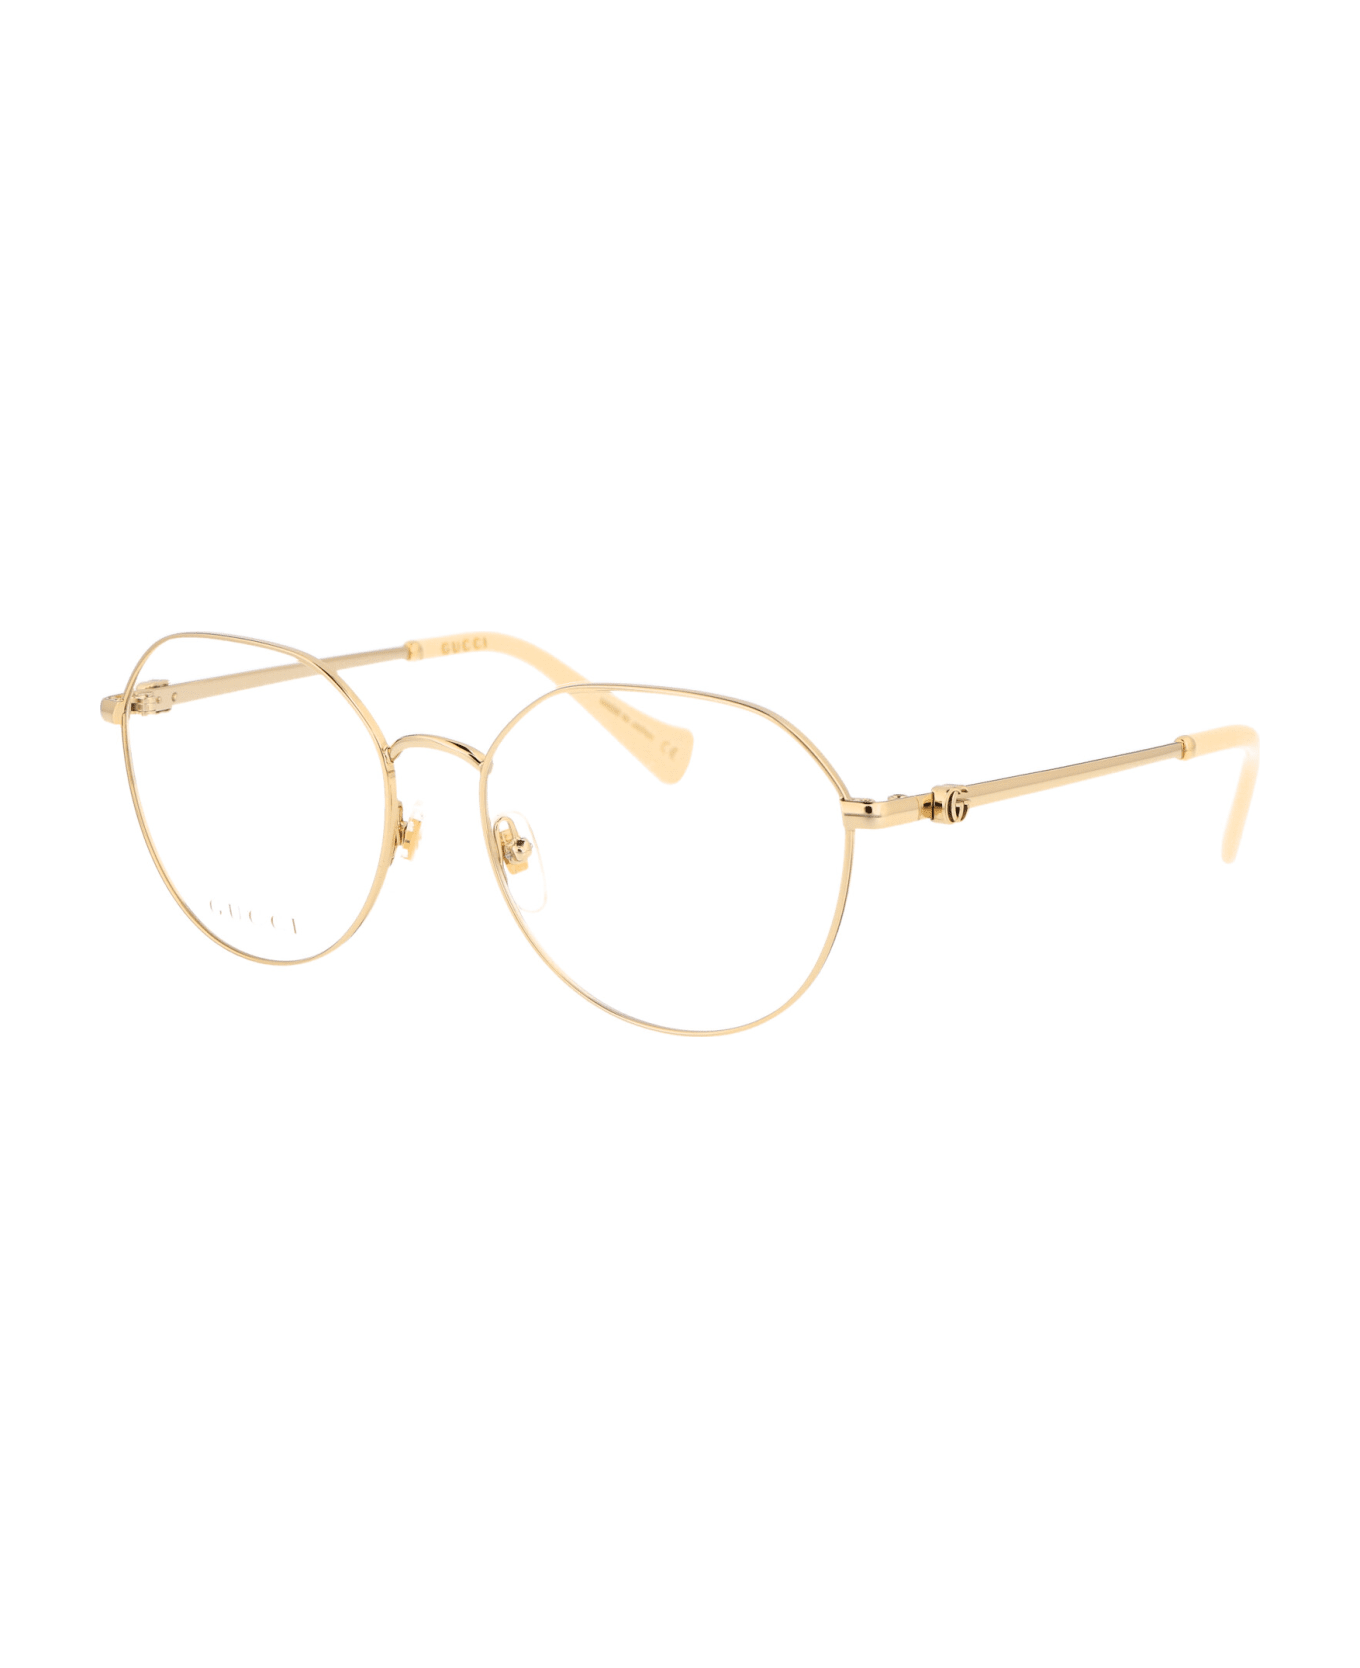 Gucci Eyewear Gg1145o Glasses - 003 GOLD GOLD TRANSPARENT